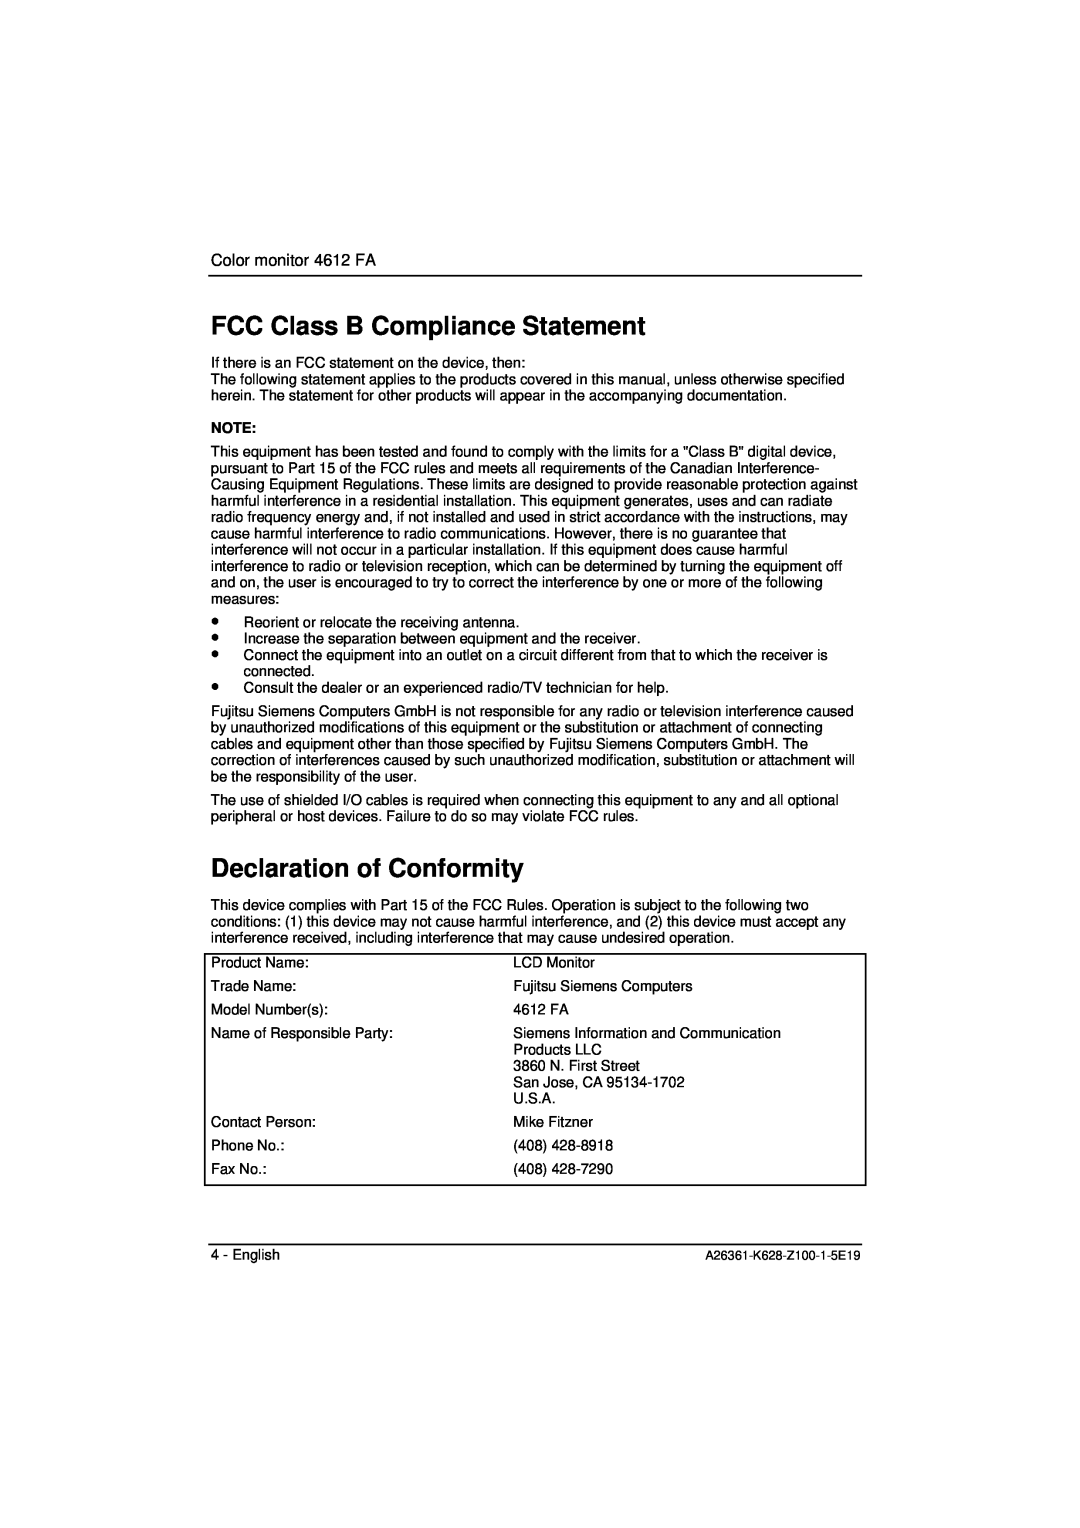 Fujitsu Siemens Computers manual FCC Class B Compliance Statement, Declaration of Conformity, Color monitor 4612 FA 